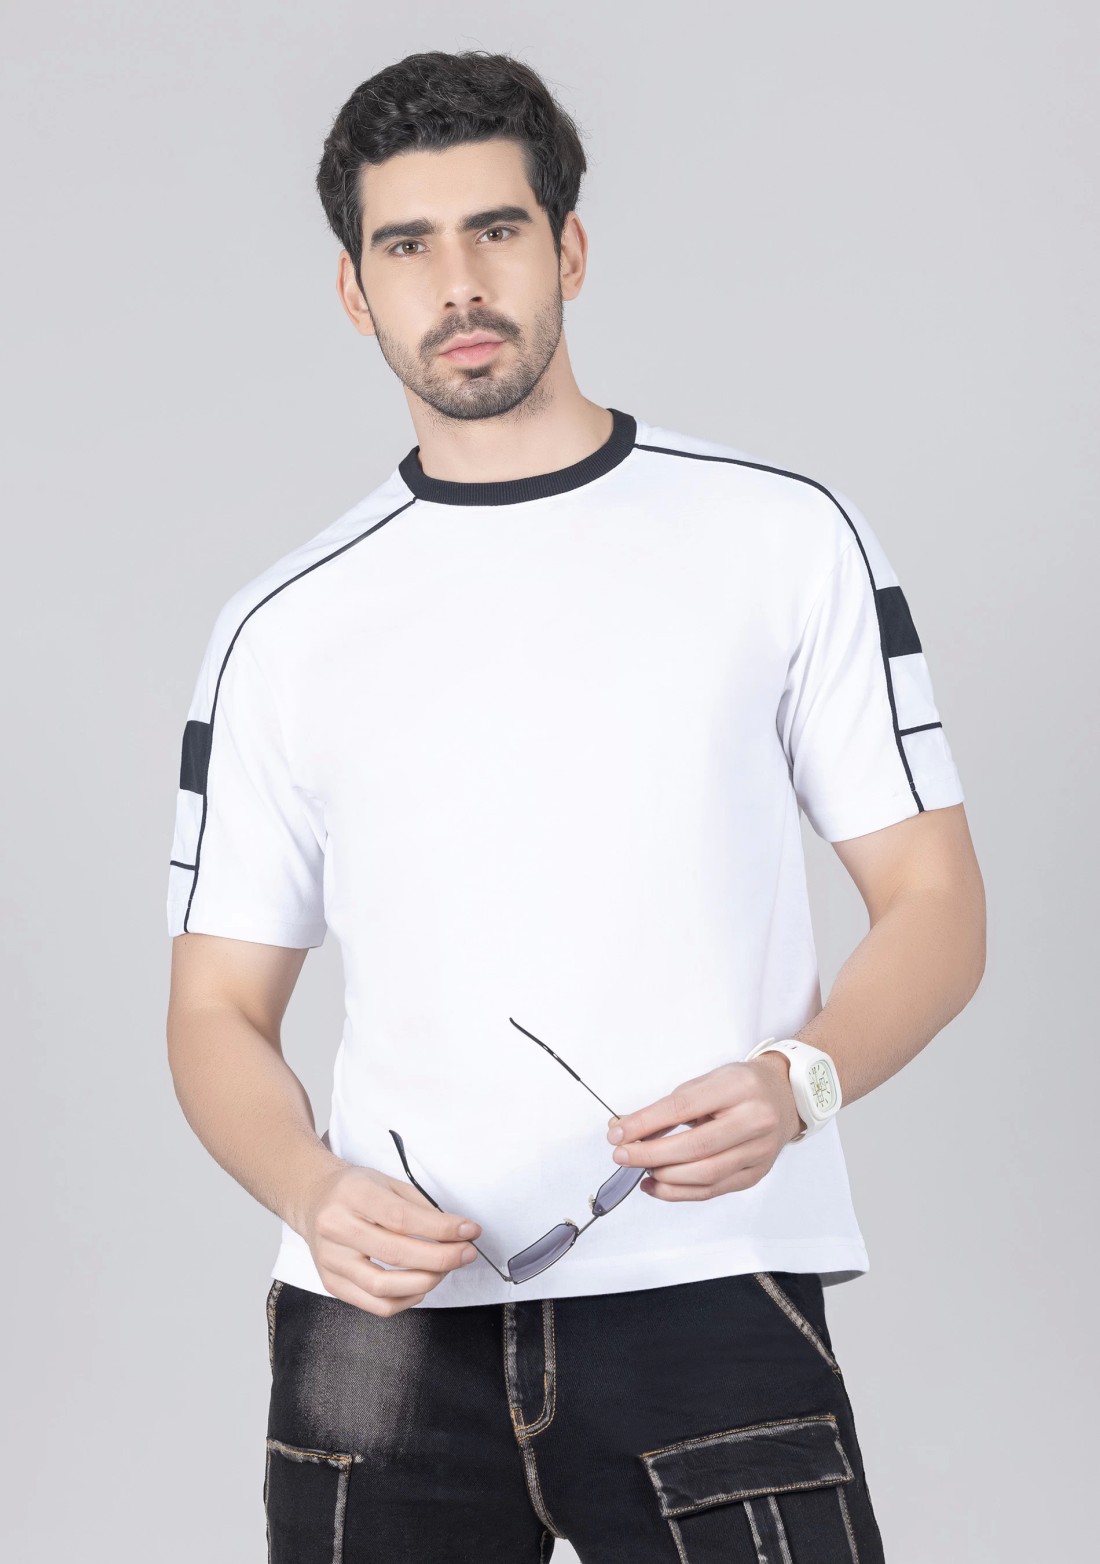 Drop Shoulder T Shirt - Buy Drop Shoulder T Shirt online in India